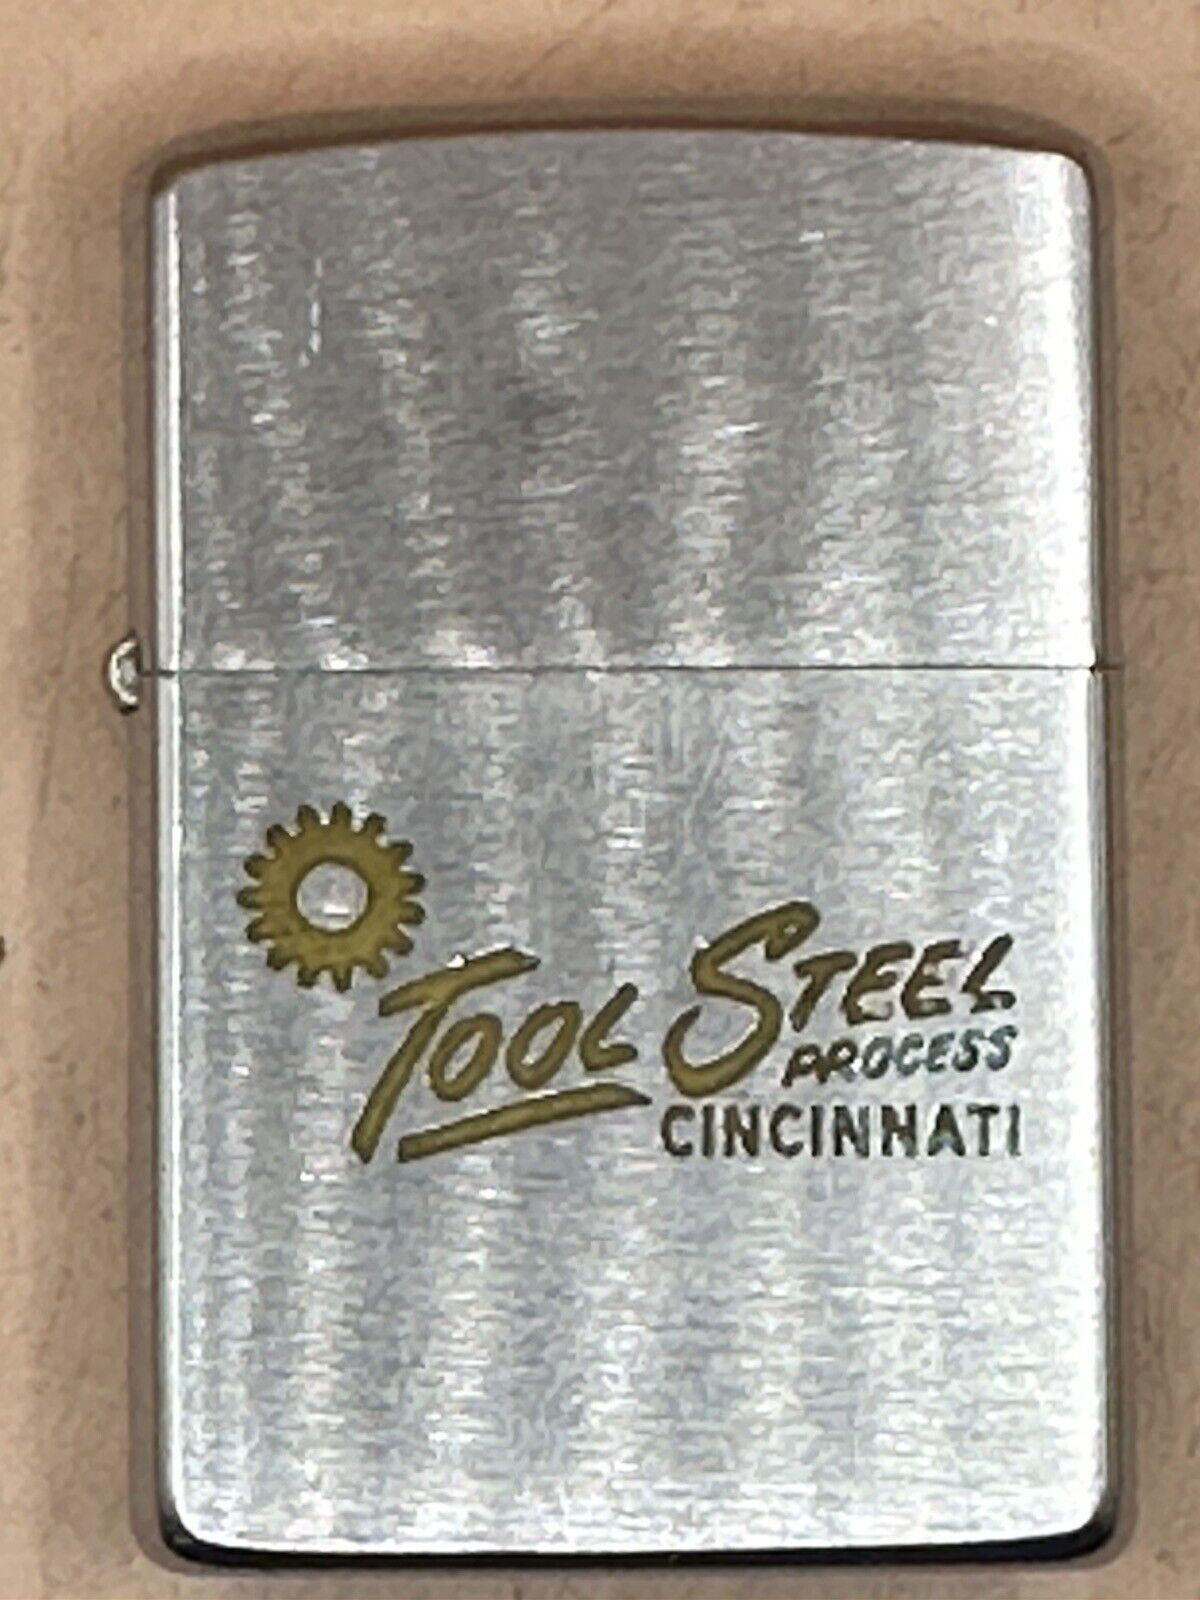 Vintage 1972 Tool Steel Process Cincinnati Advertising Chrome Zippo Lighter